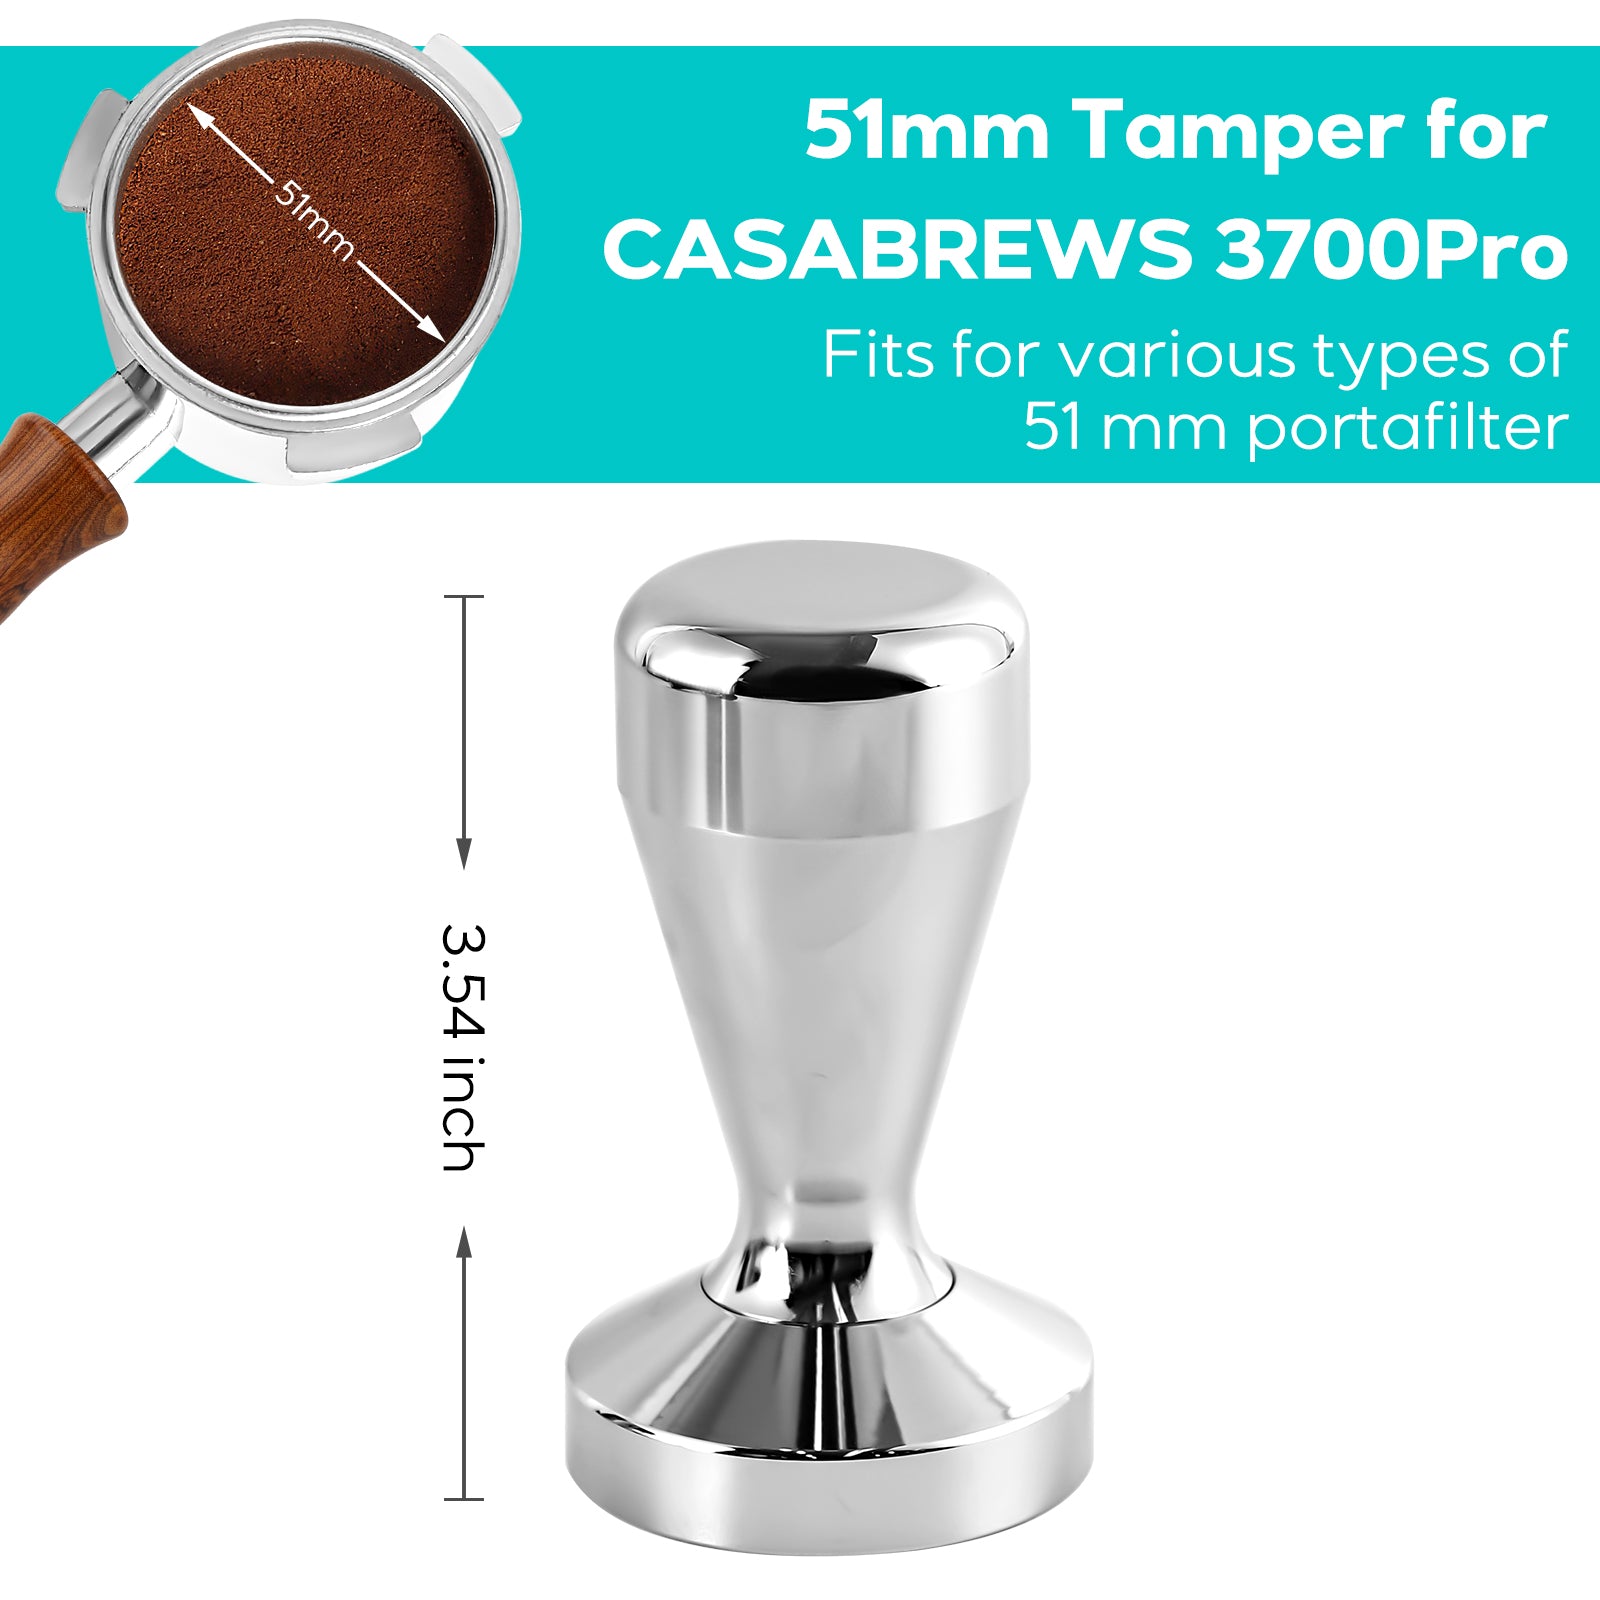 Casabrews Espresso Machine 3700Pro Manual Stainless Steel Tamper